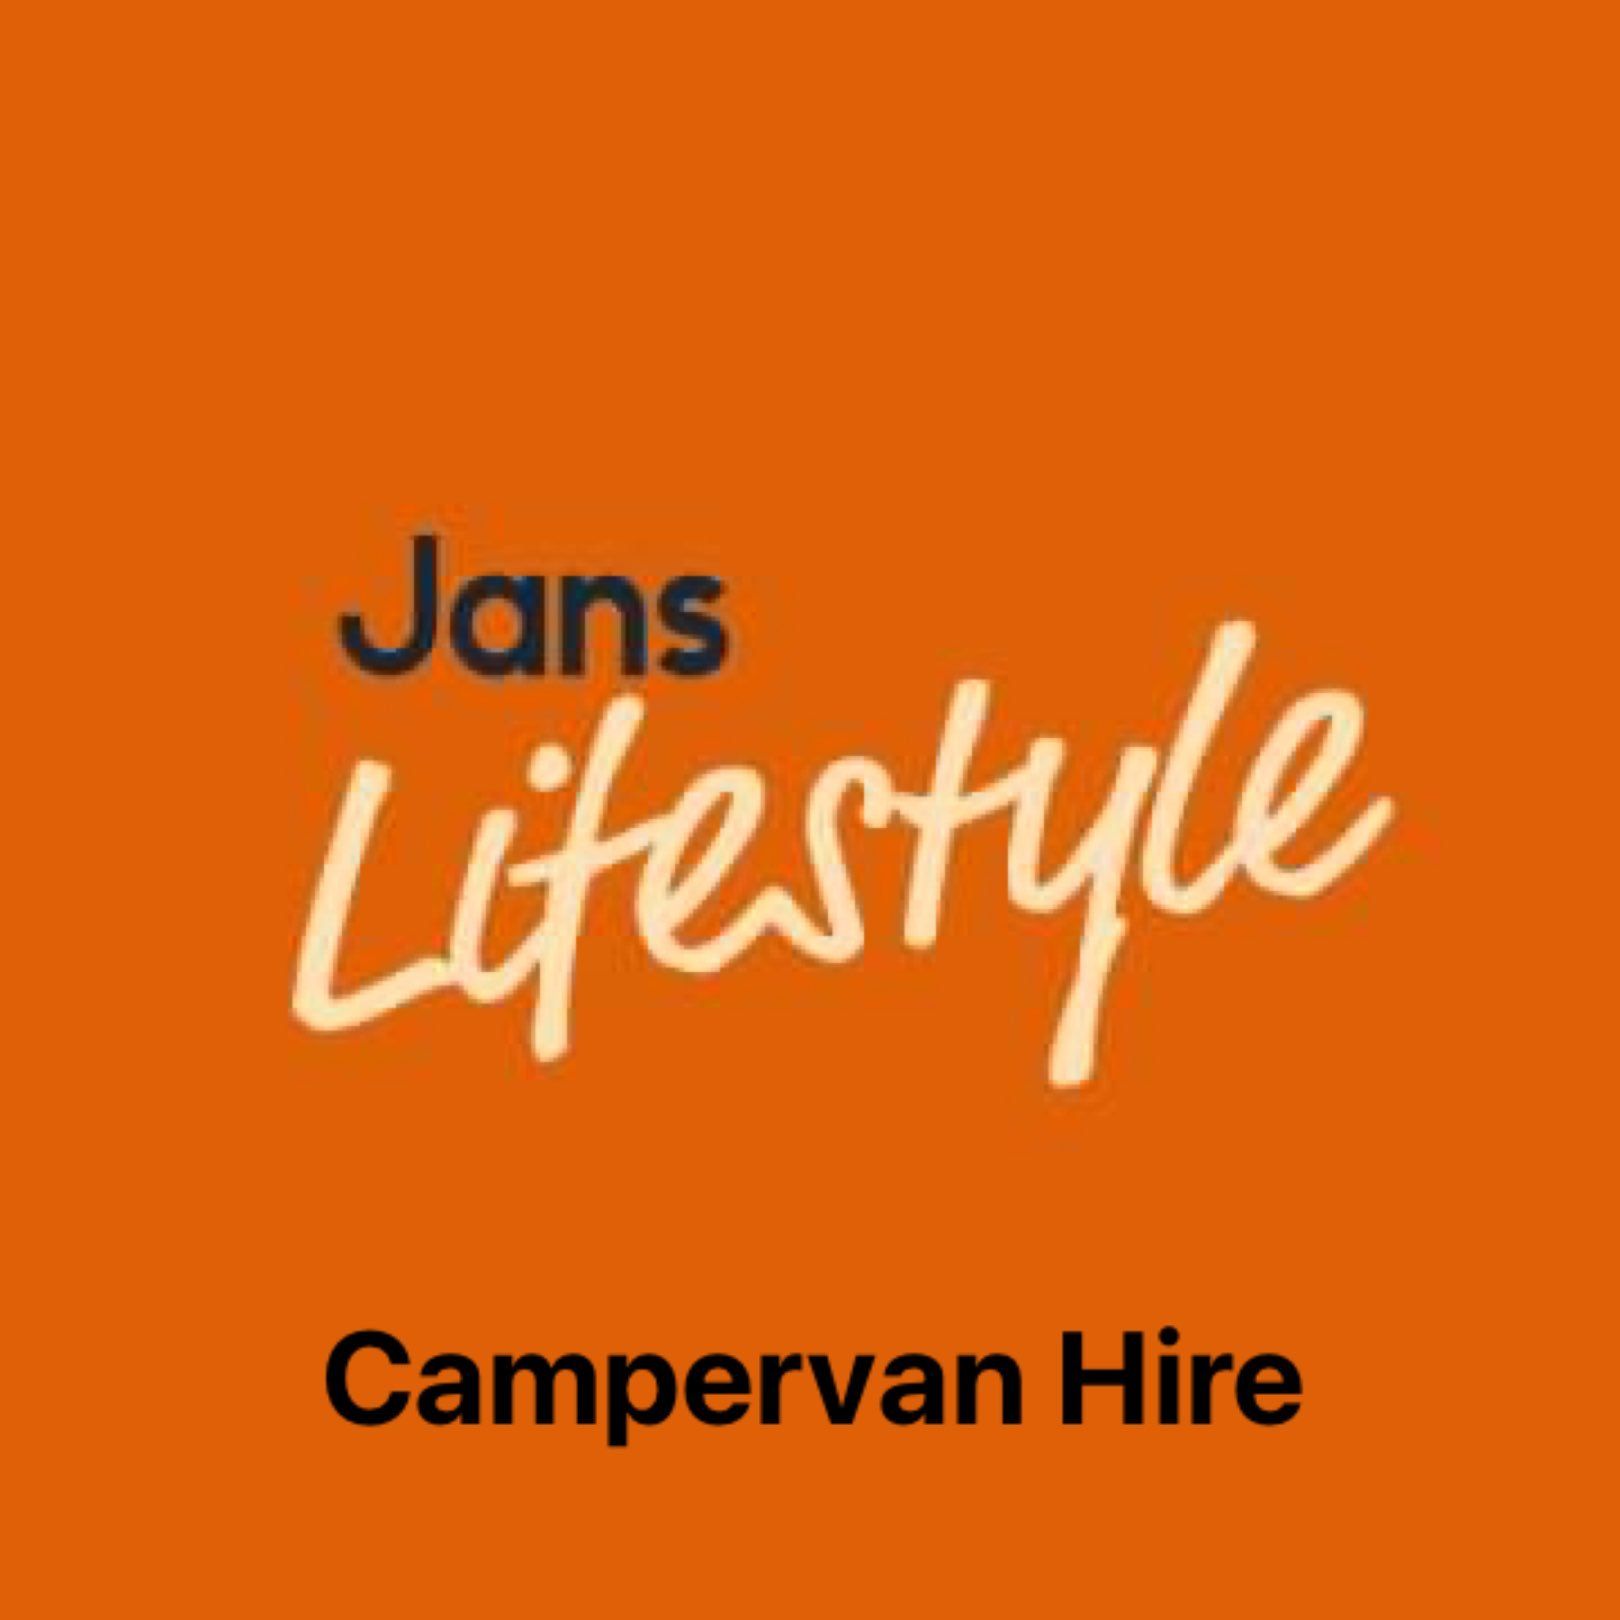 JANS Lifestyle Campervan Hire- CampingNI members discount